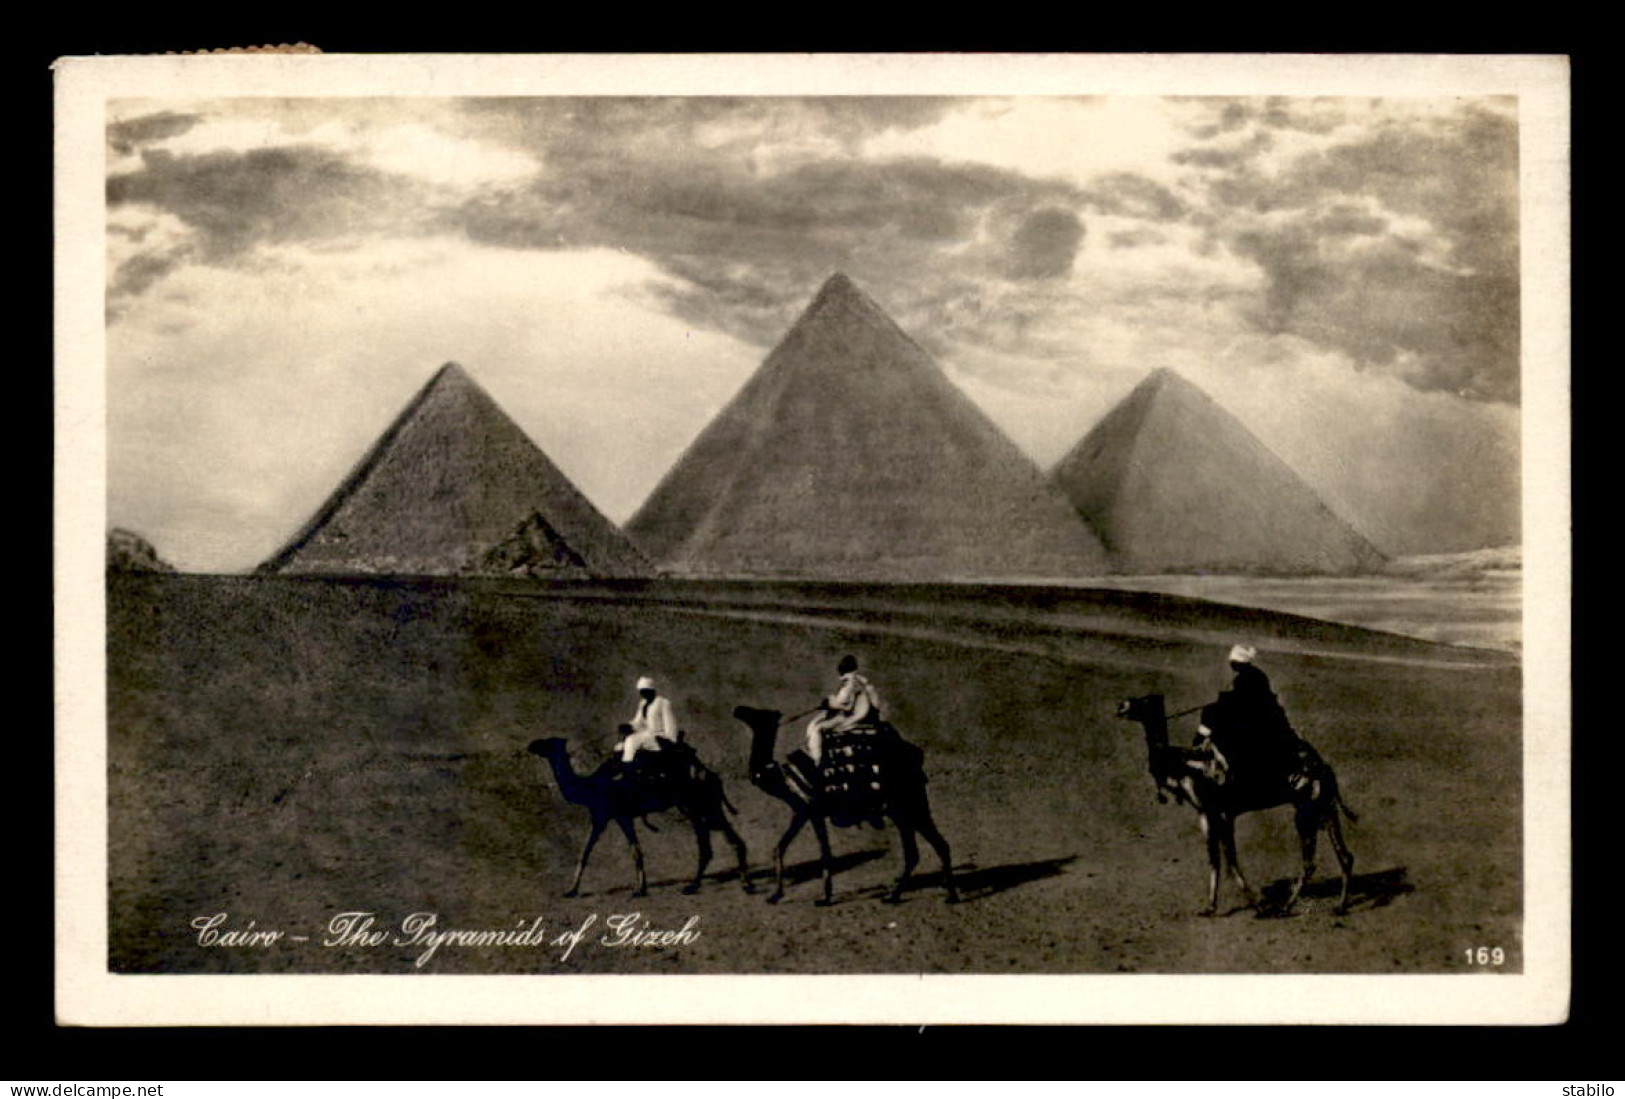 EGYPTE - LENHERT & LANDROCK N°169 - CAIRO - THE PYRAMIDS OF GIZEH - CHAMEAUX - Caïro